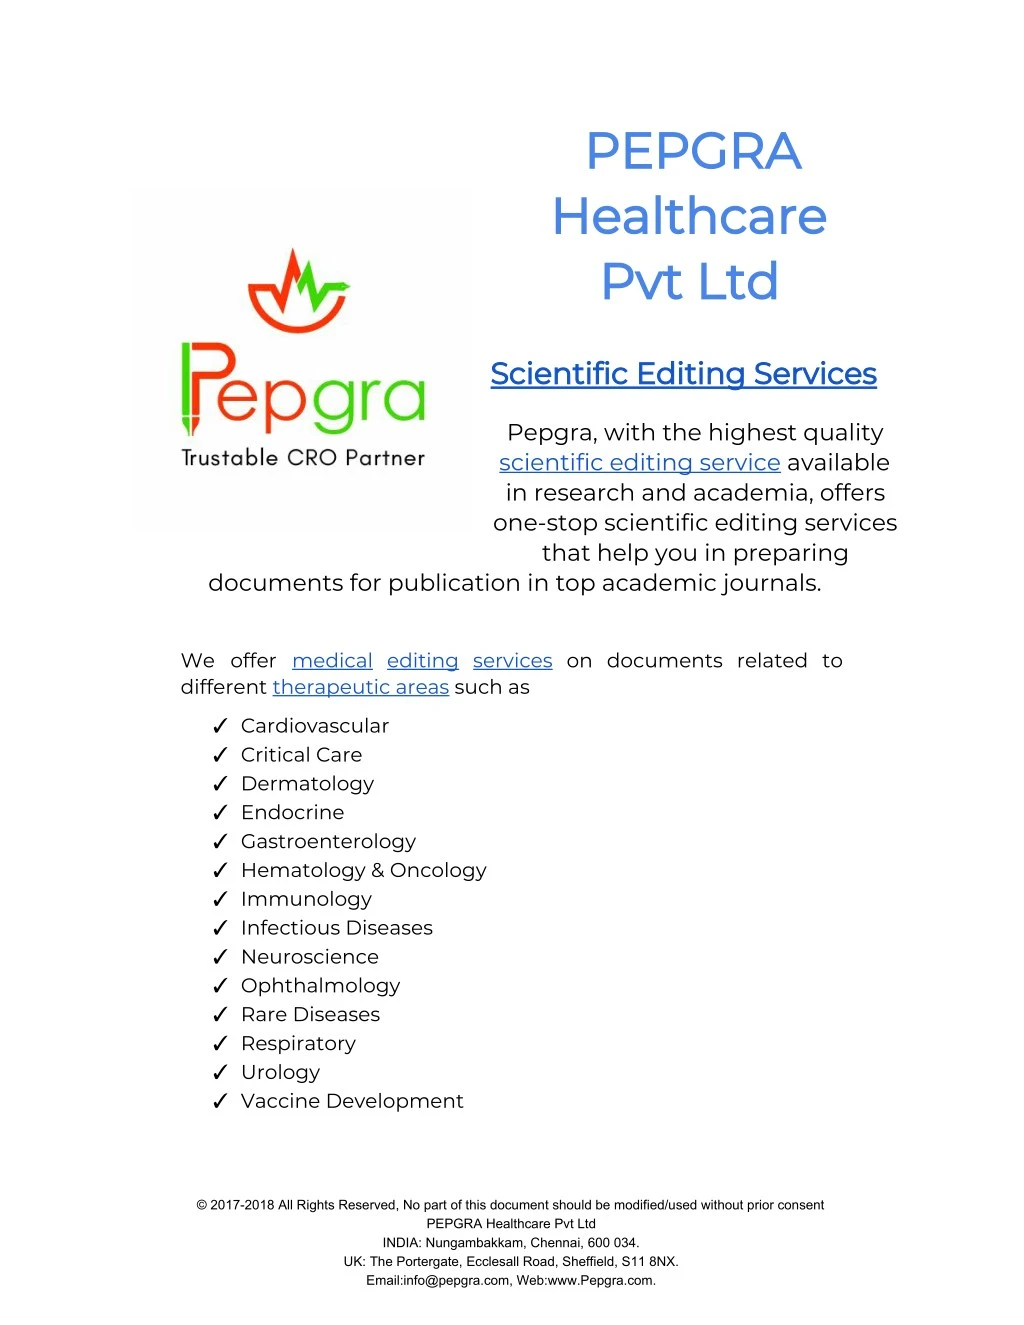 pepgra pepgra healthcare healthcare